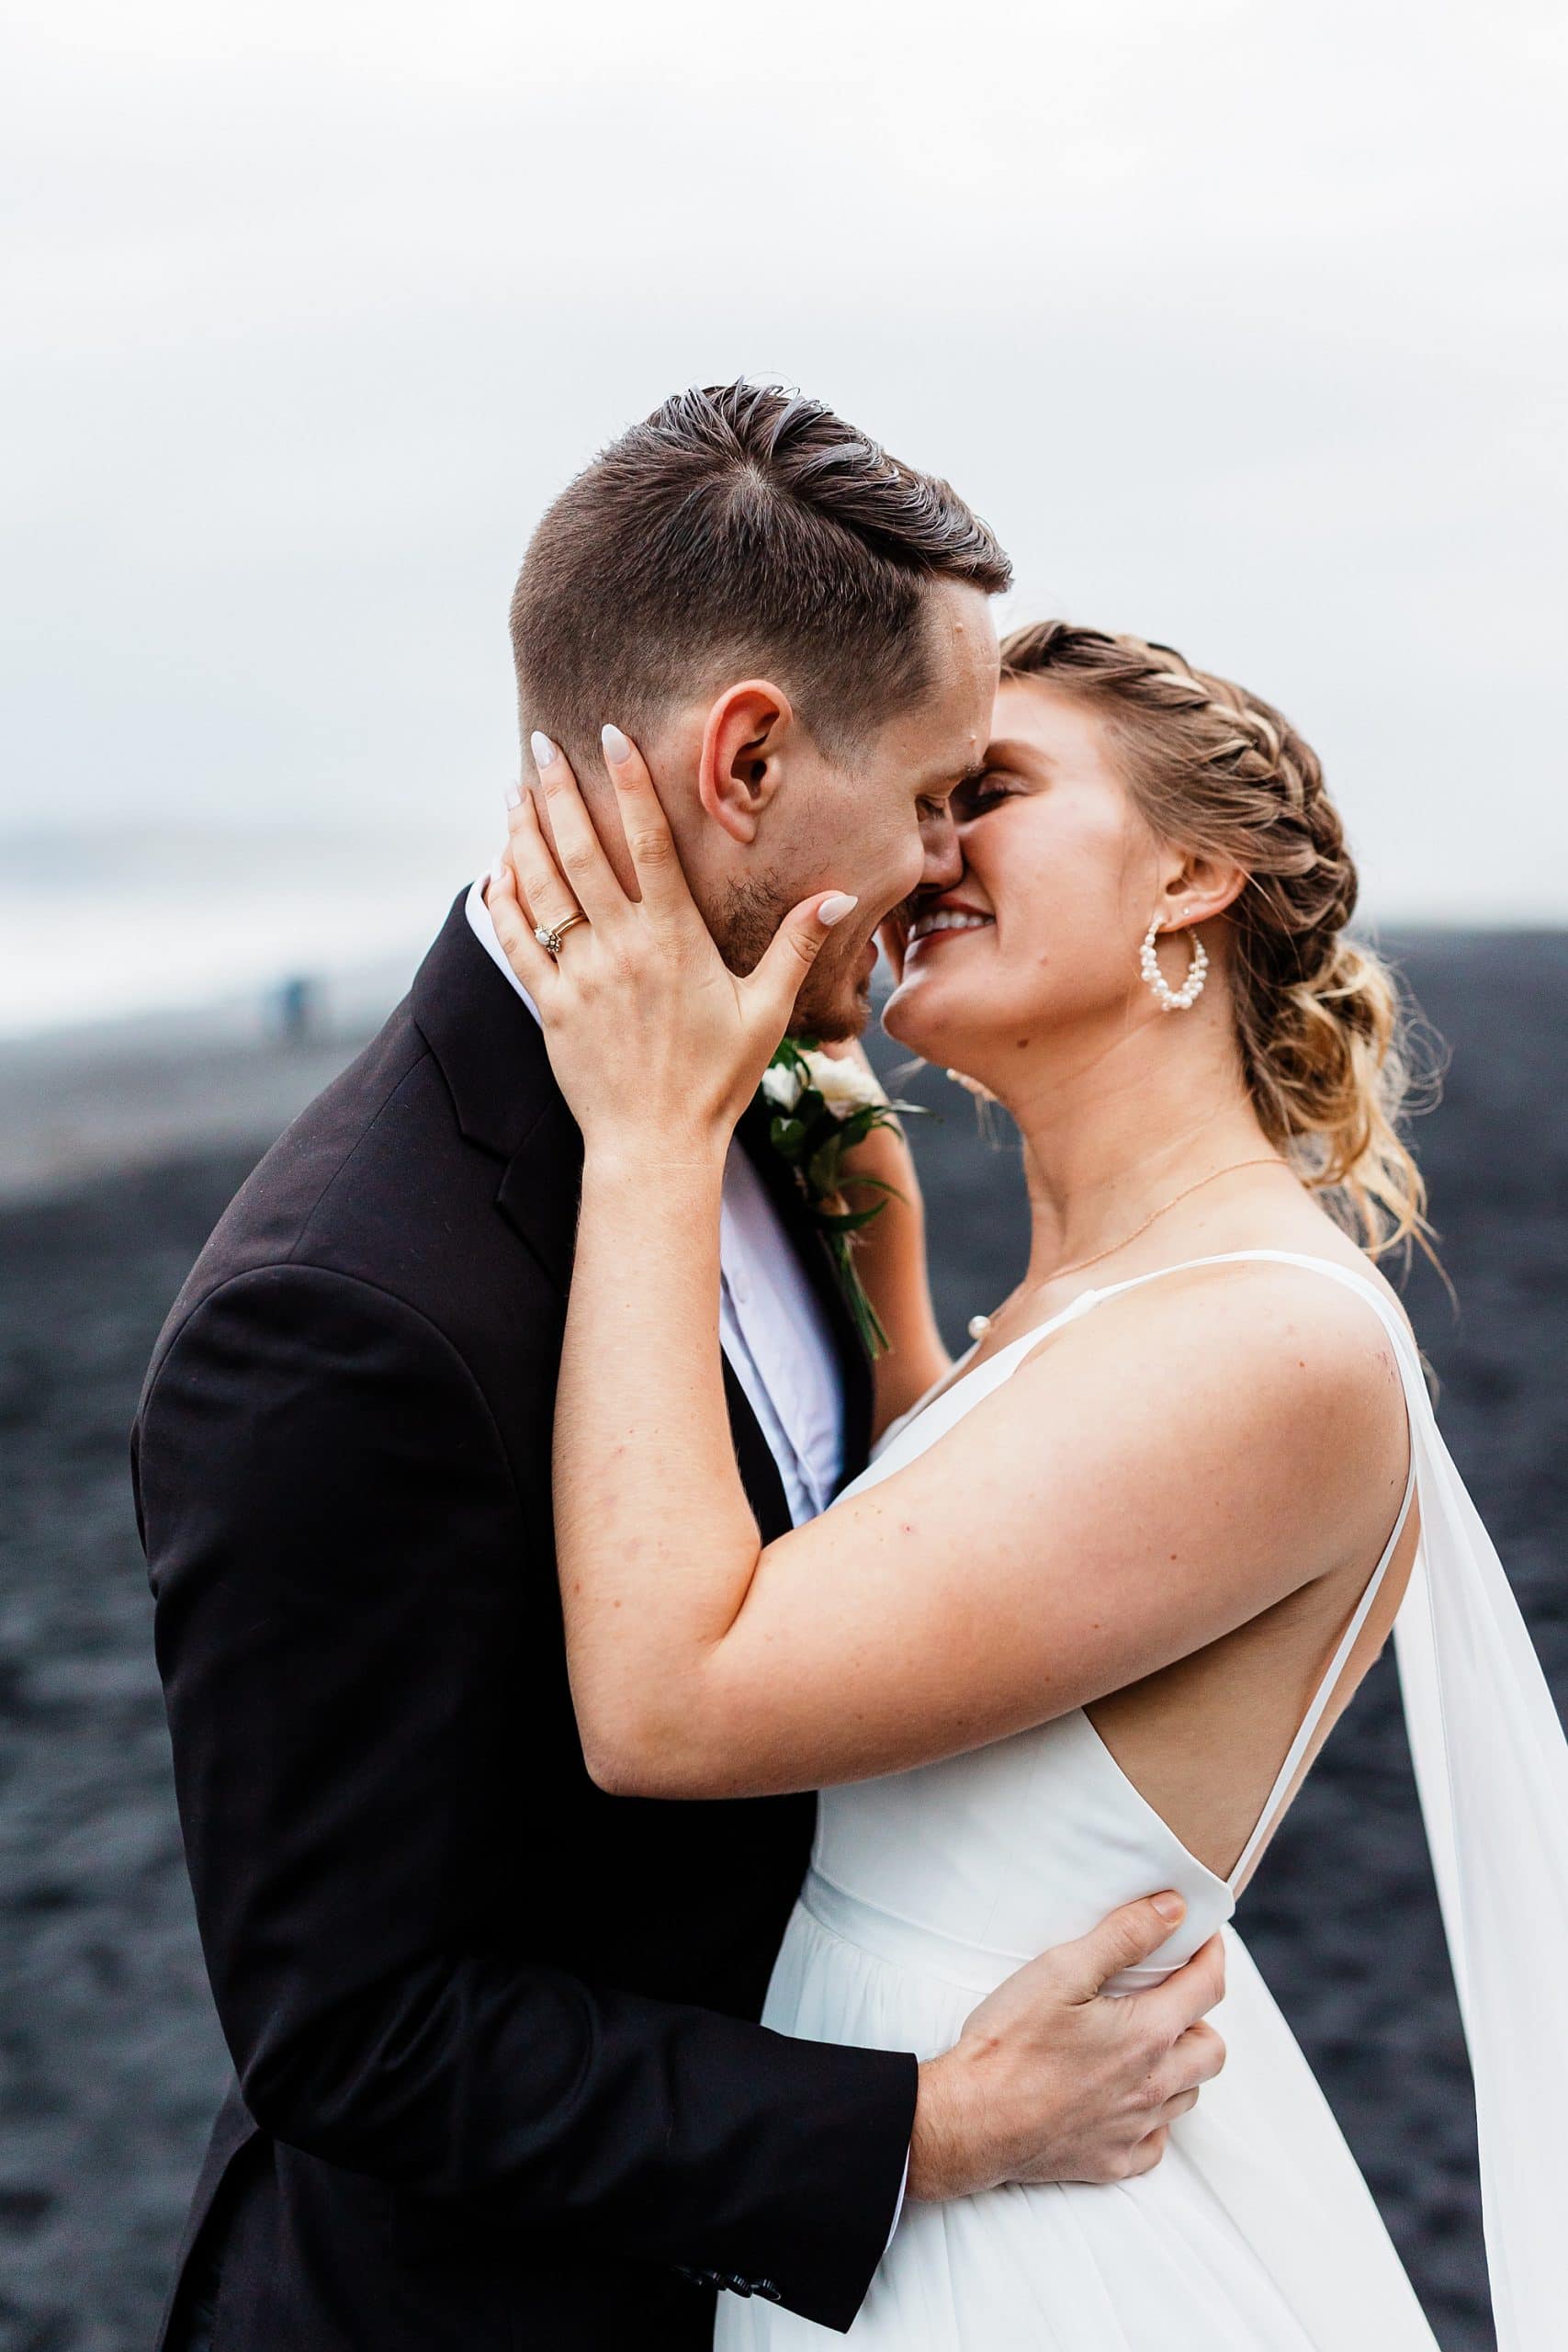 A newly married couple kisses on Iceland's Black Sand Beach